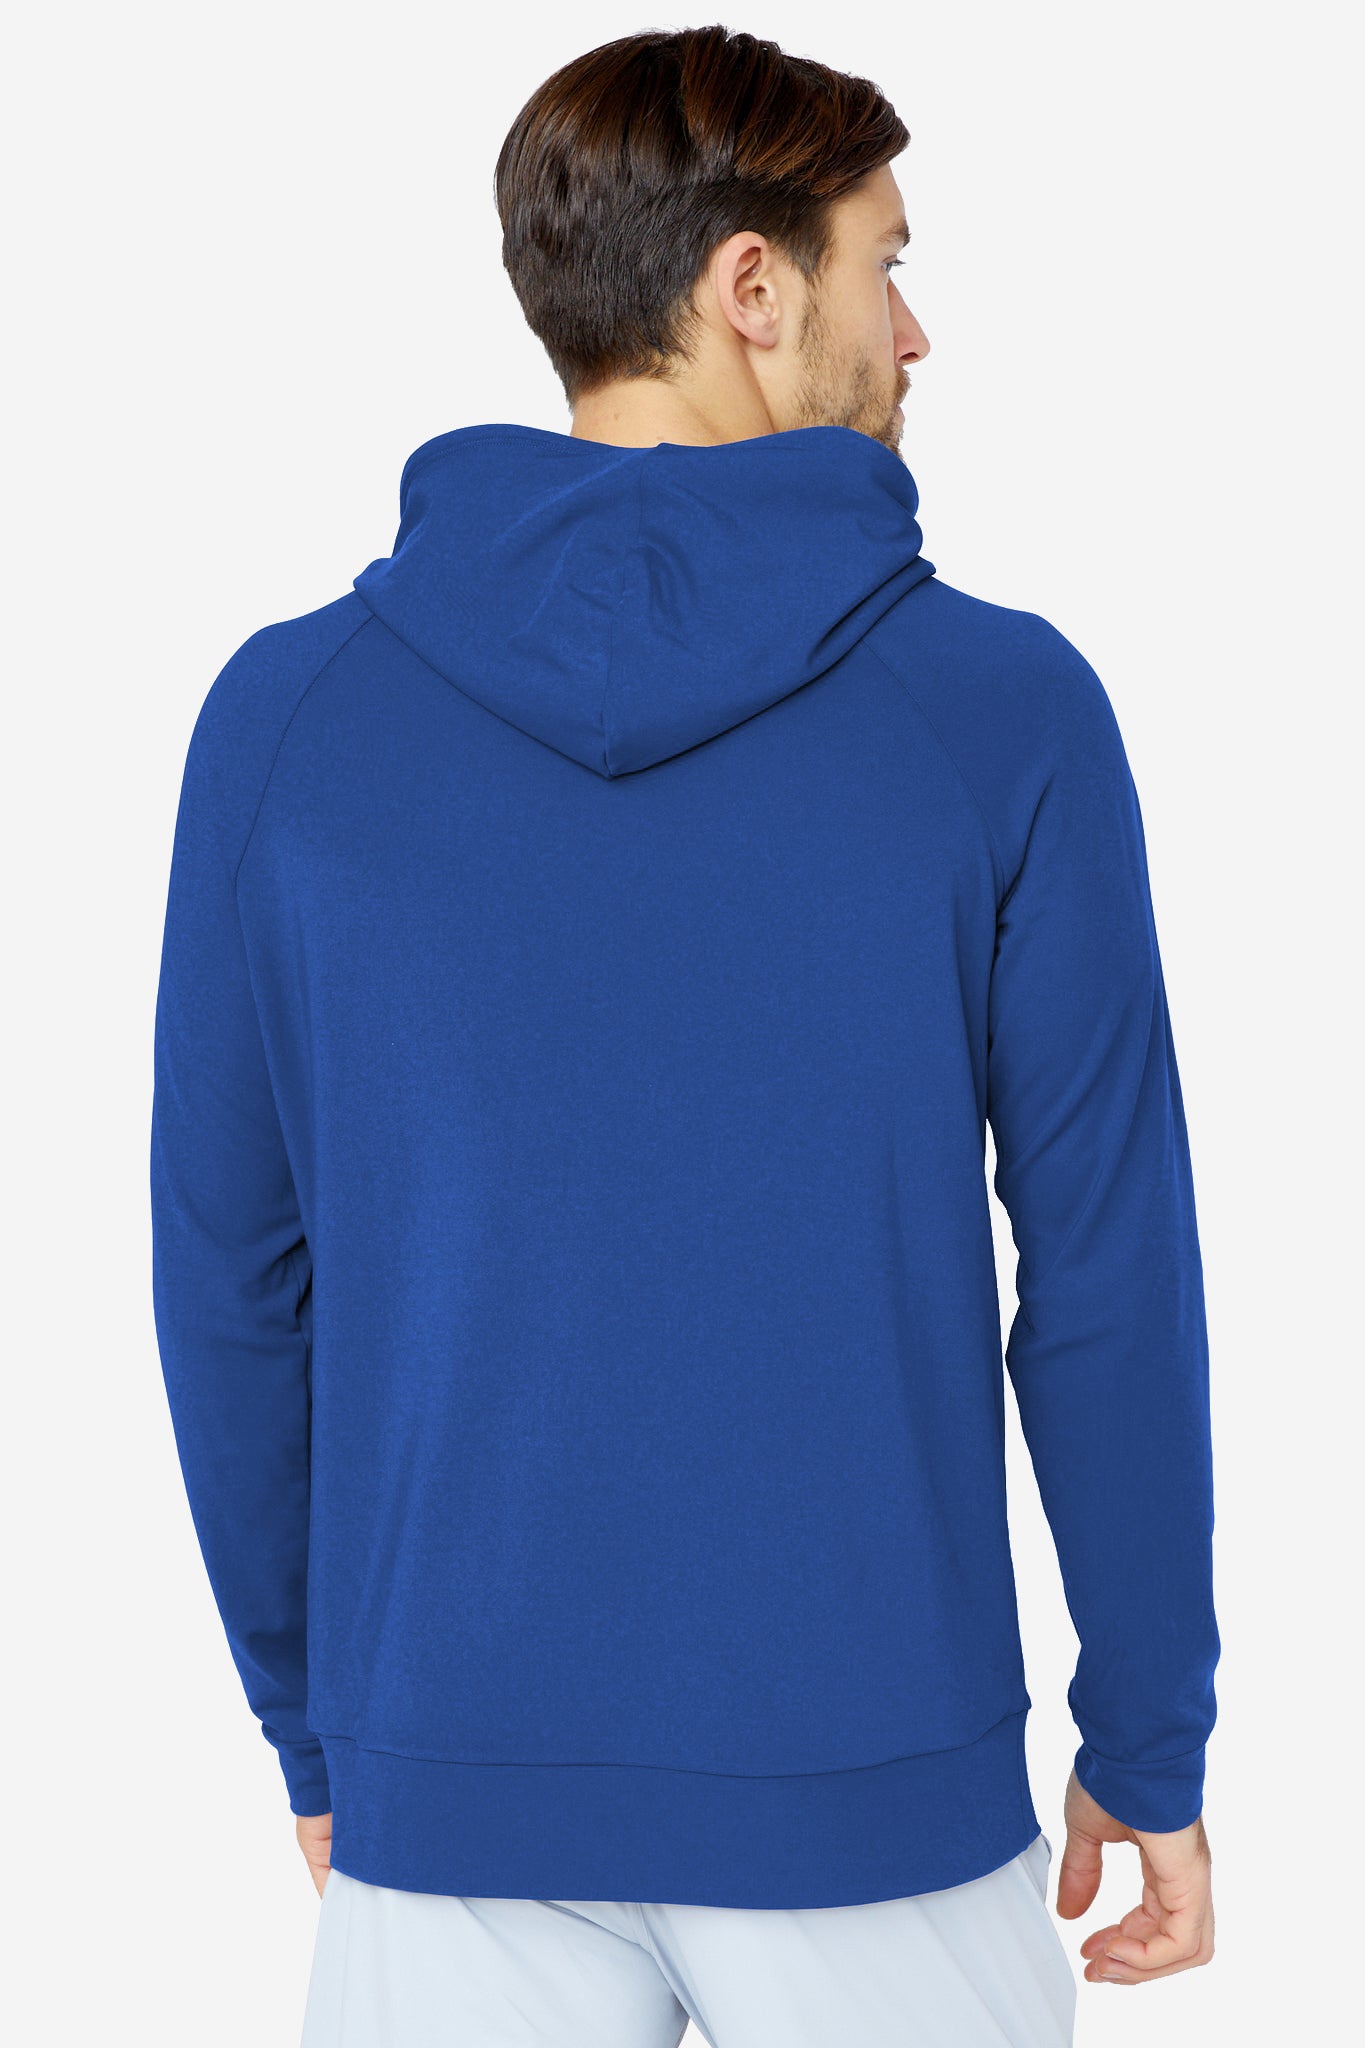 Image of the larkin hoodie in classic blue